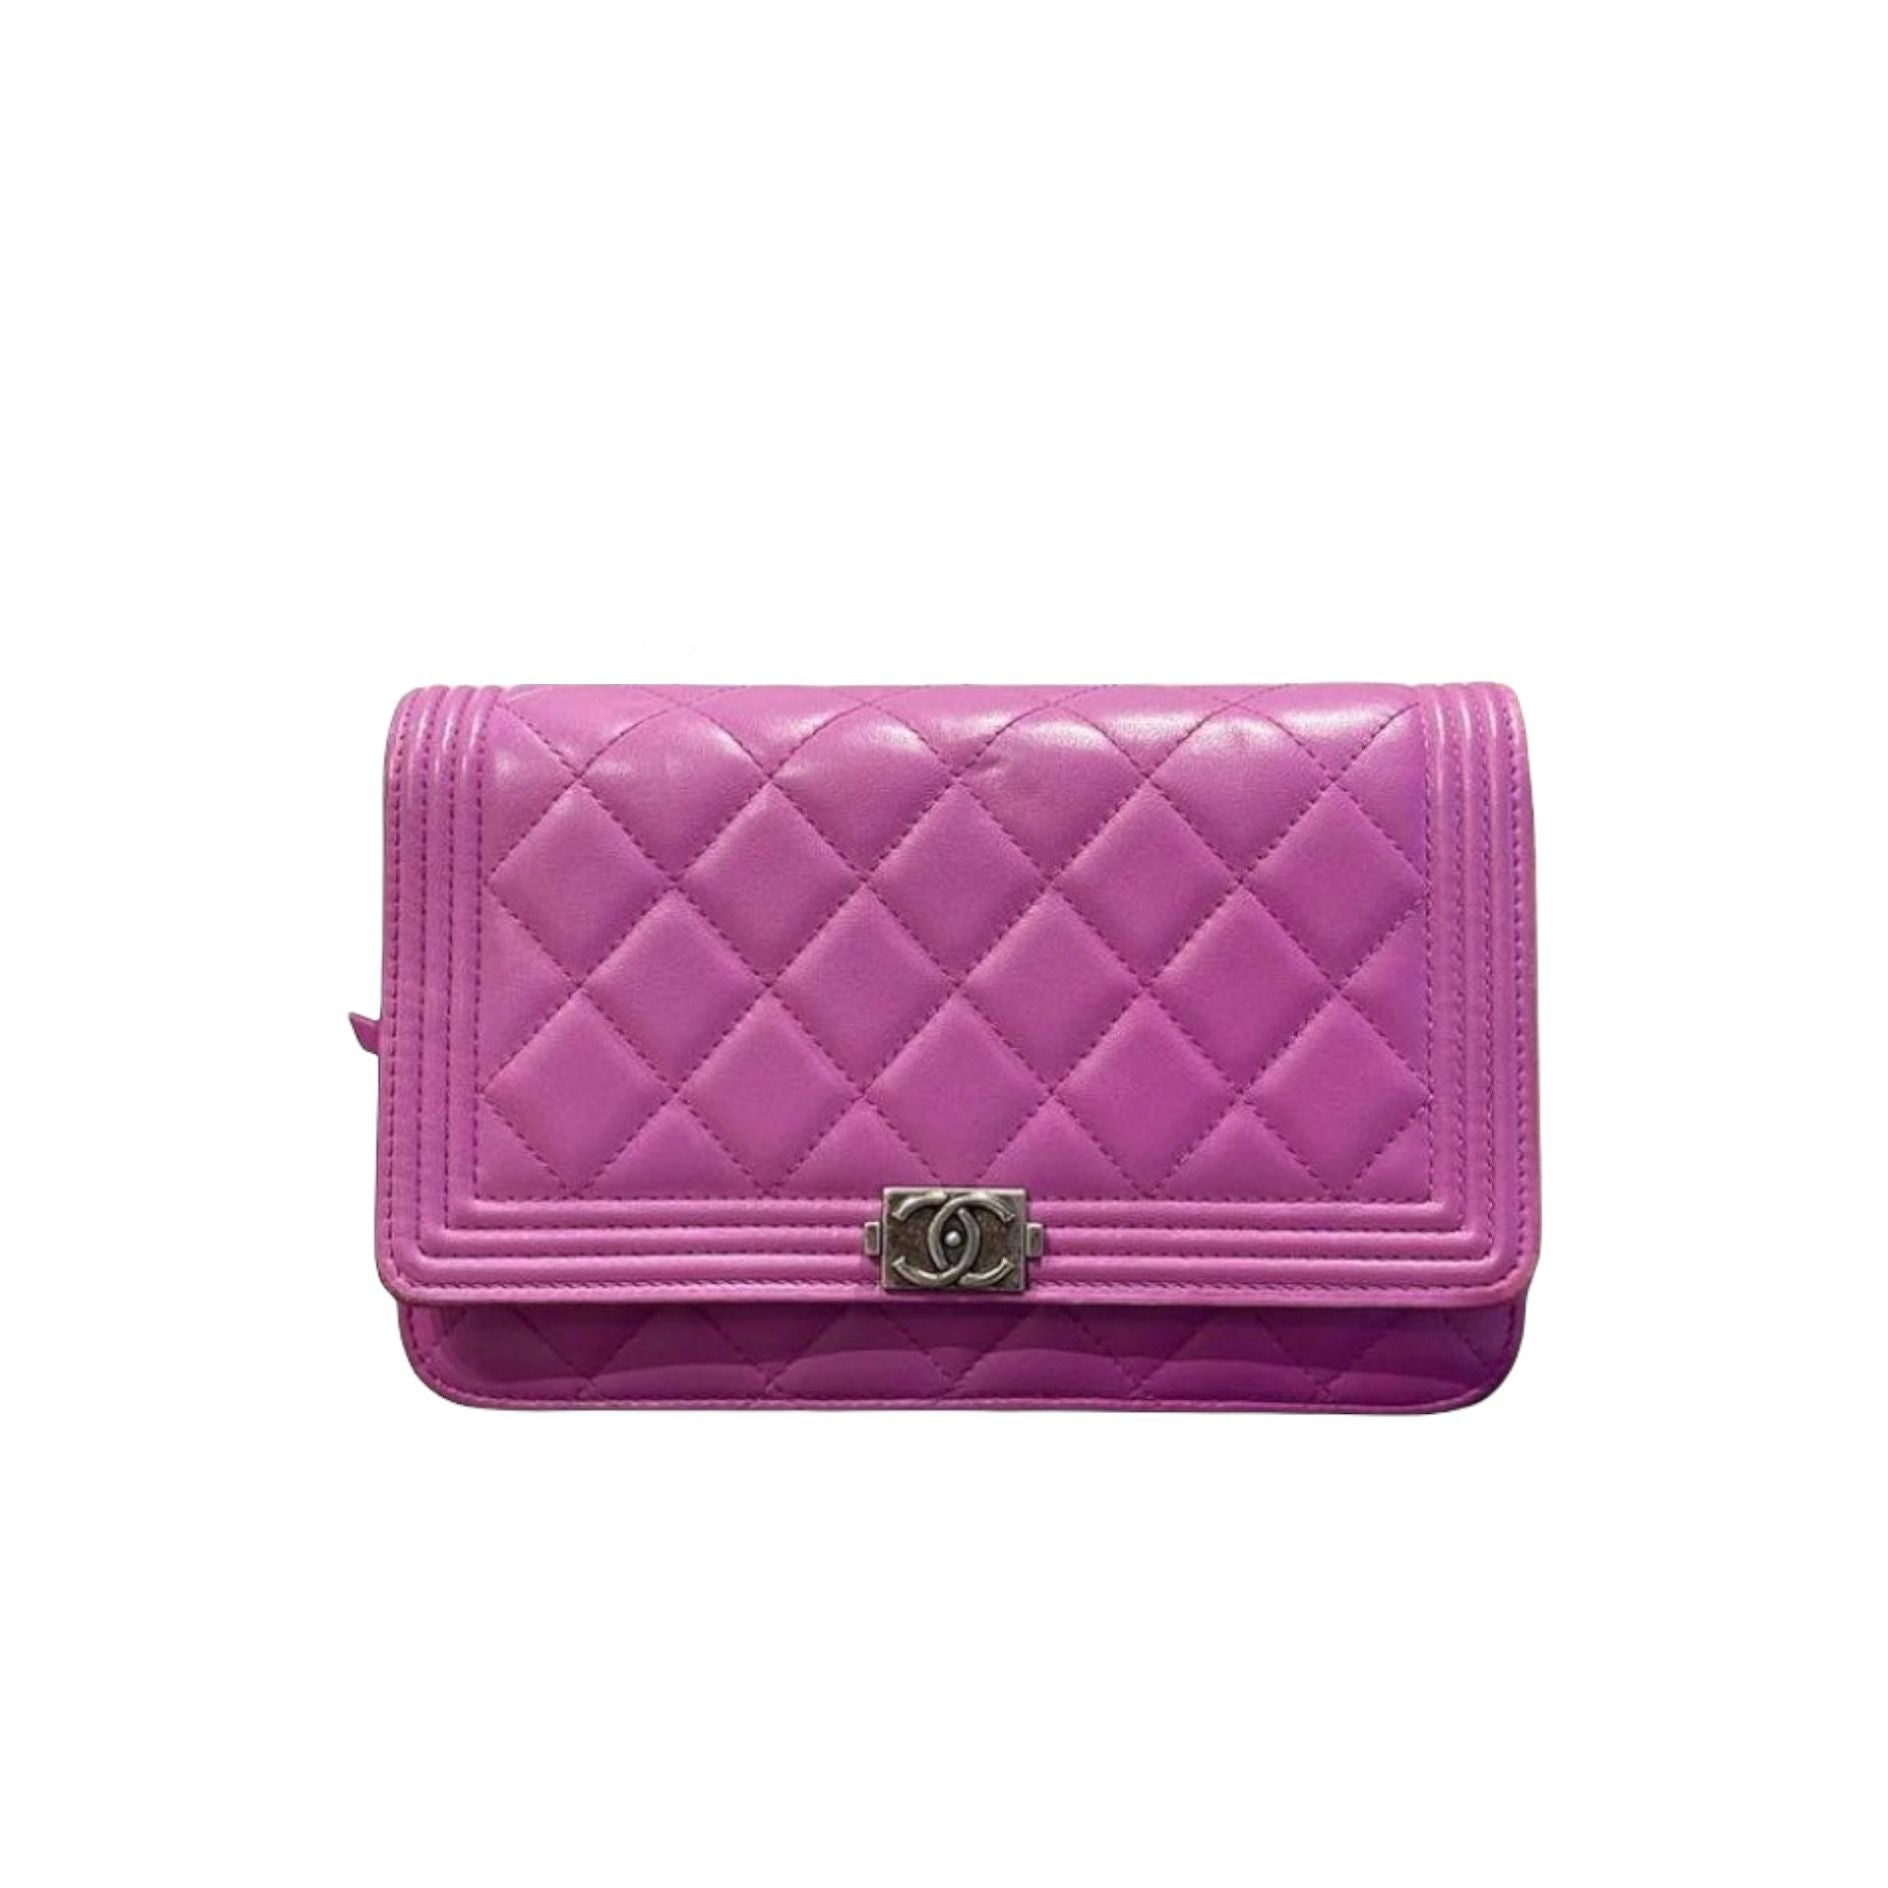 Chi tiết hơn 78 về purple chanel wallet  cdgdbentreeduvn